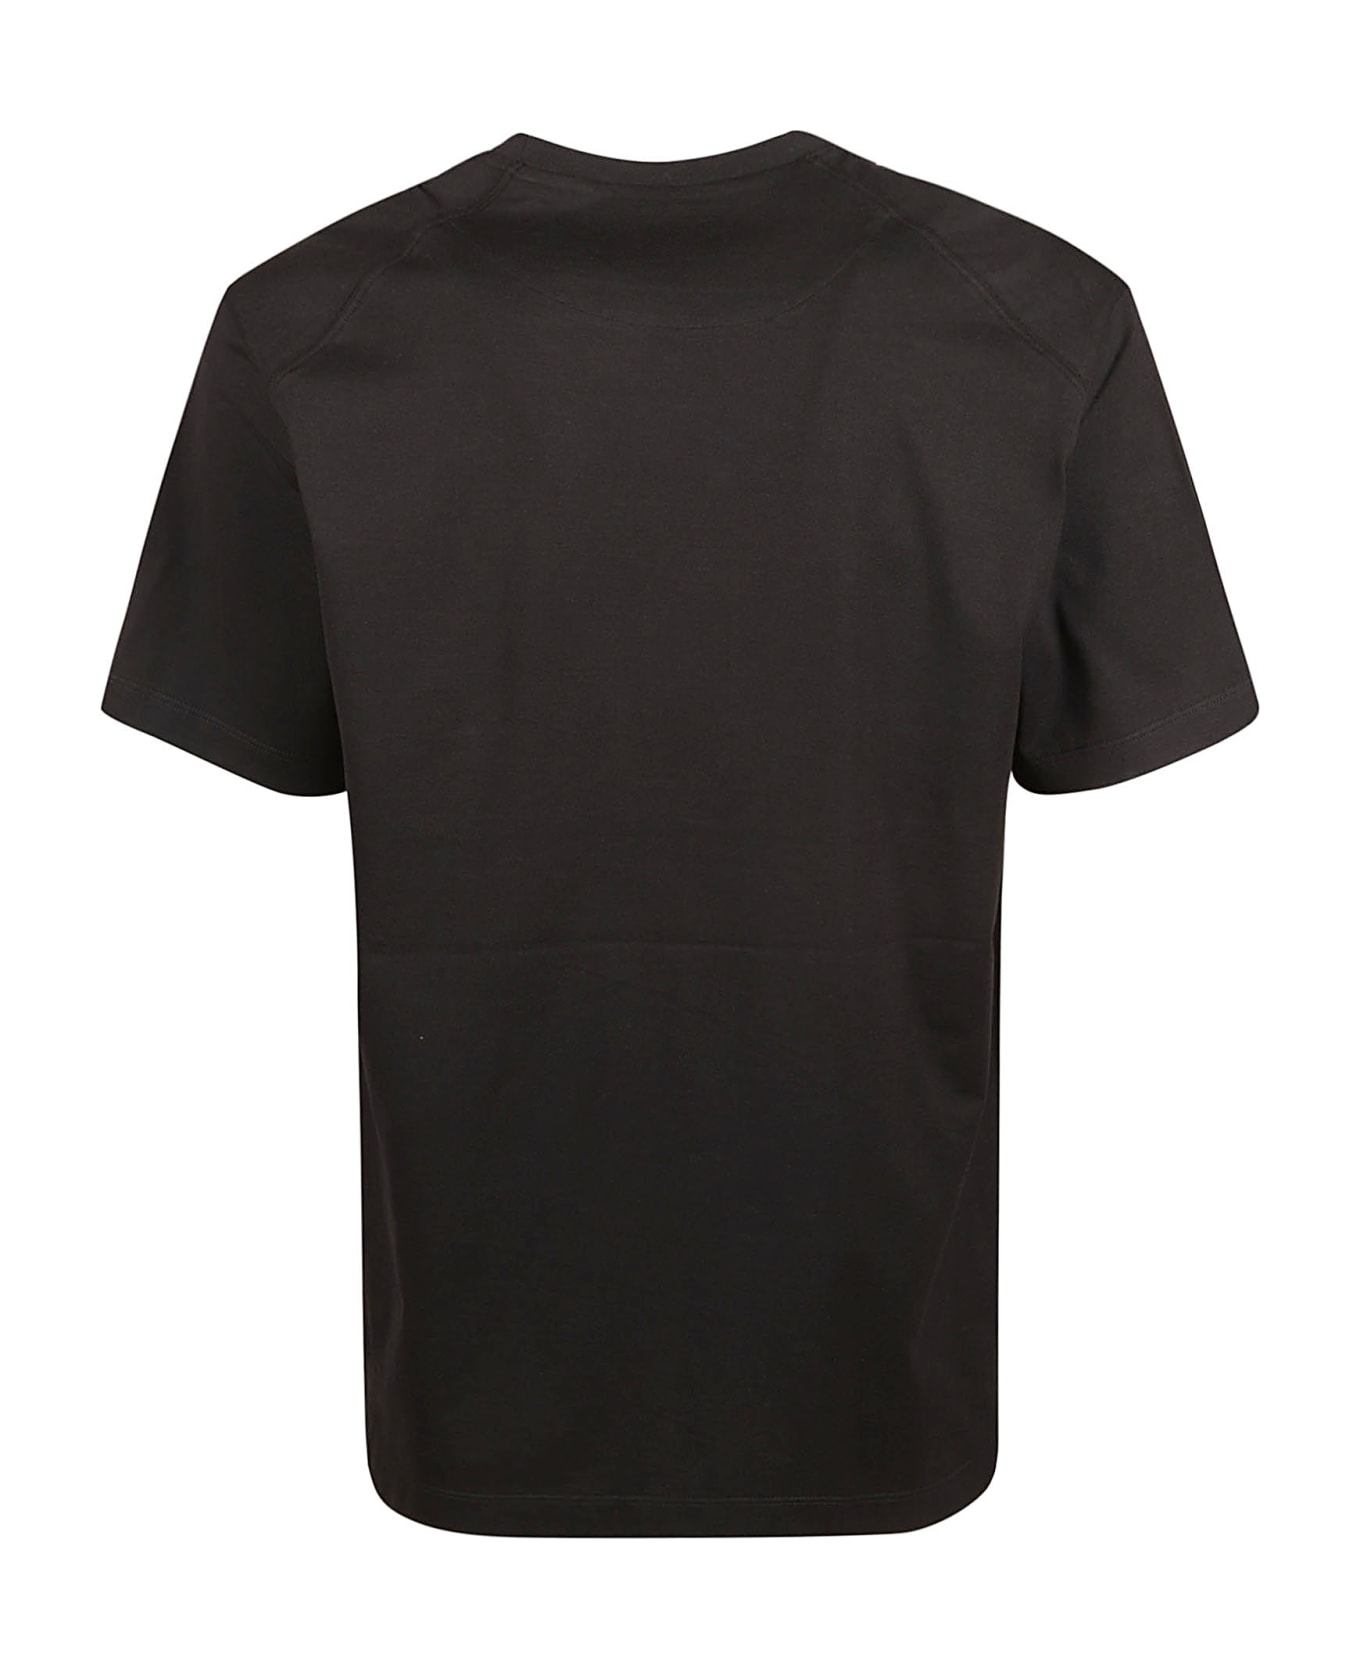 Y-3 Toral Logo T-shirt - Black